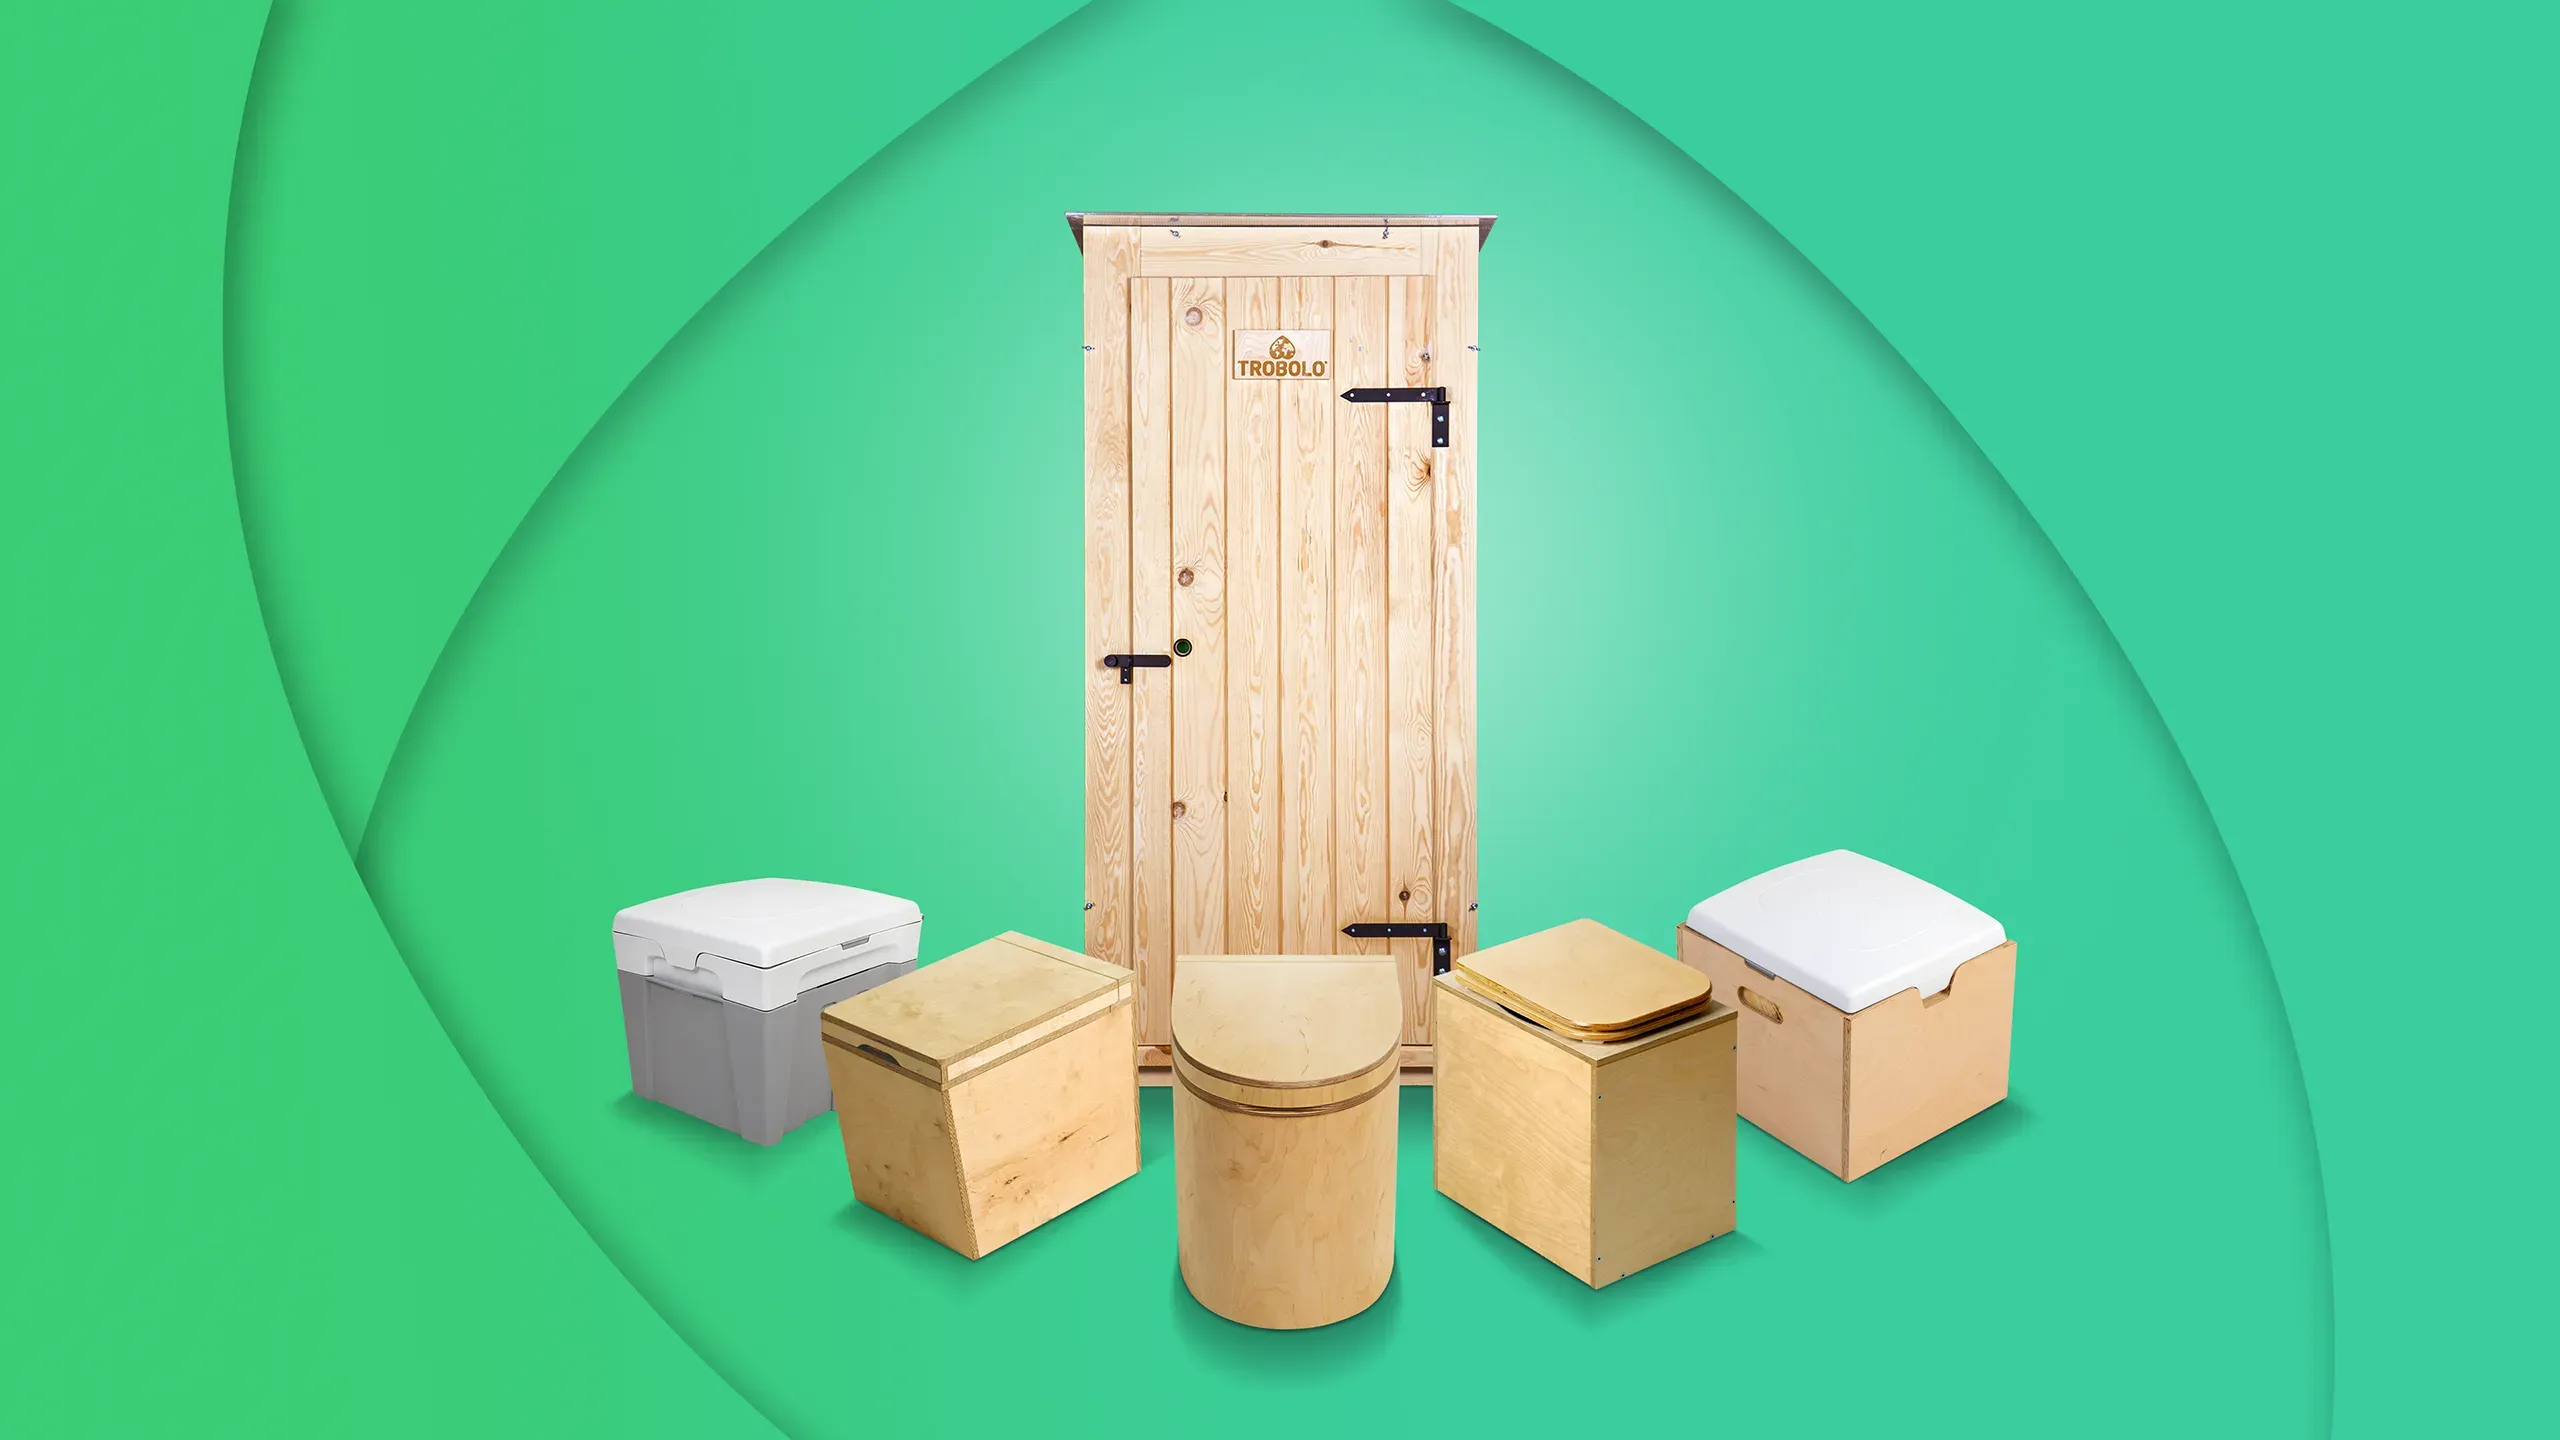 TROBOLO Composting toilets